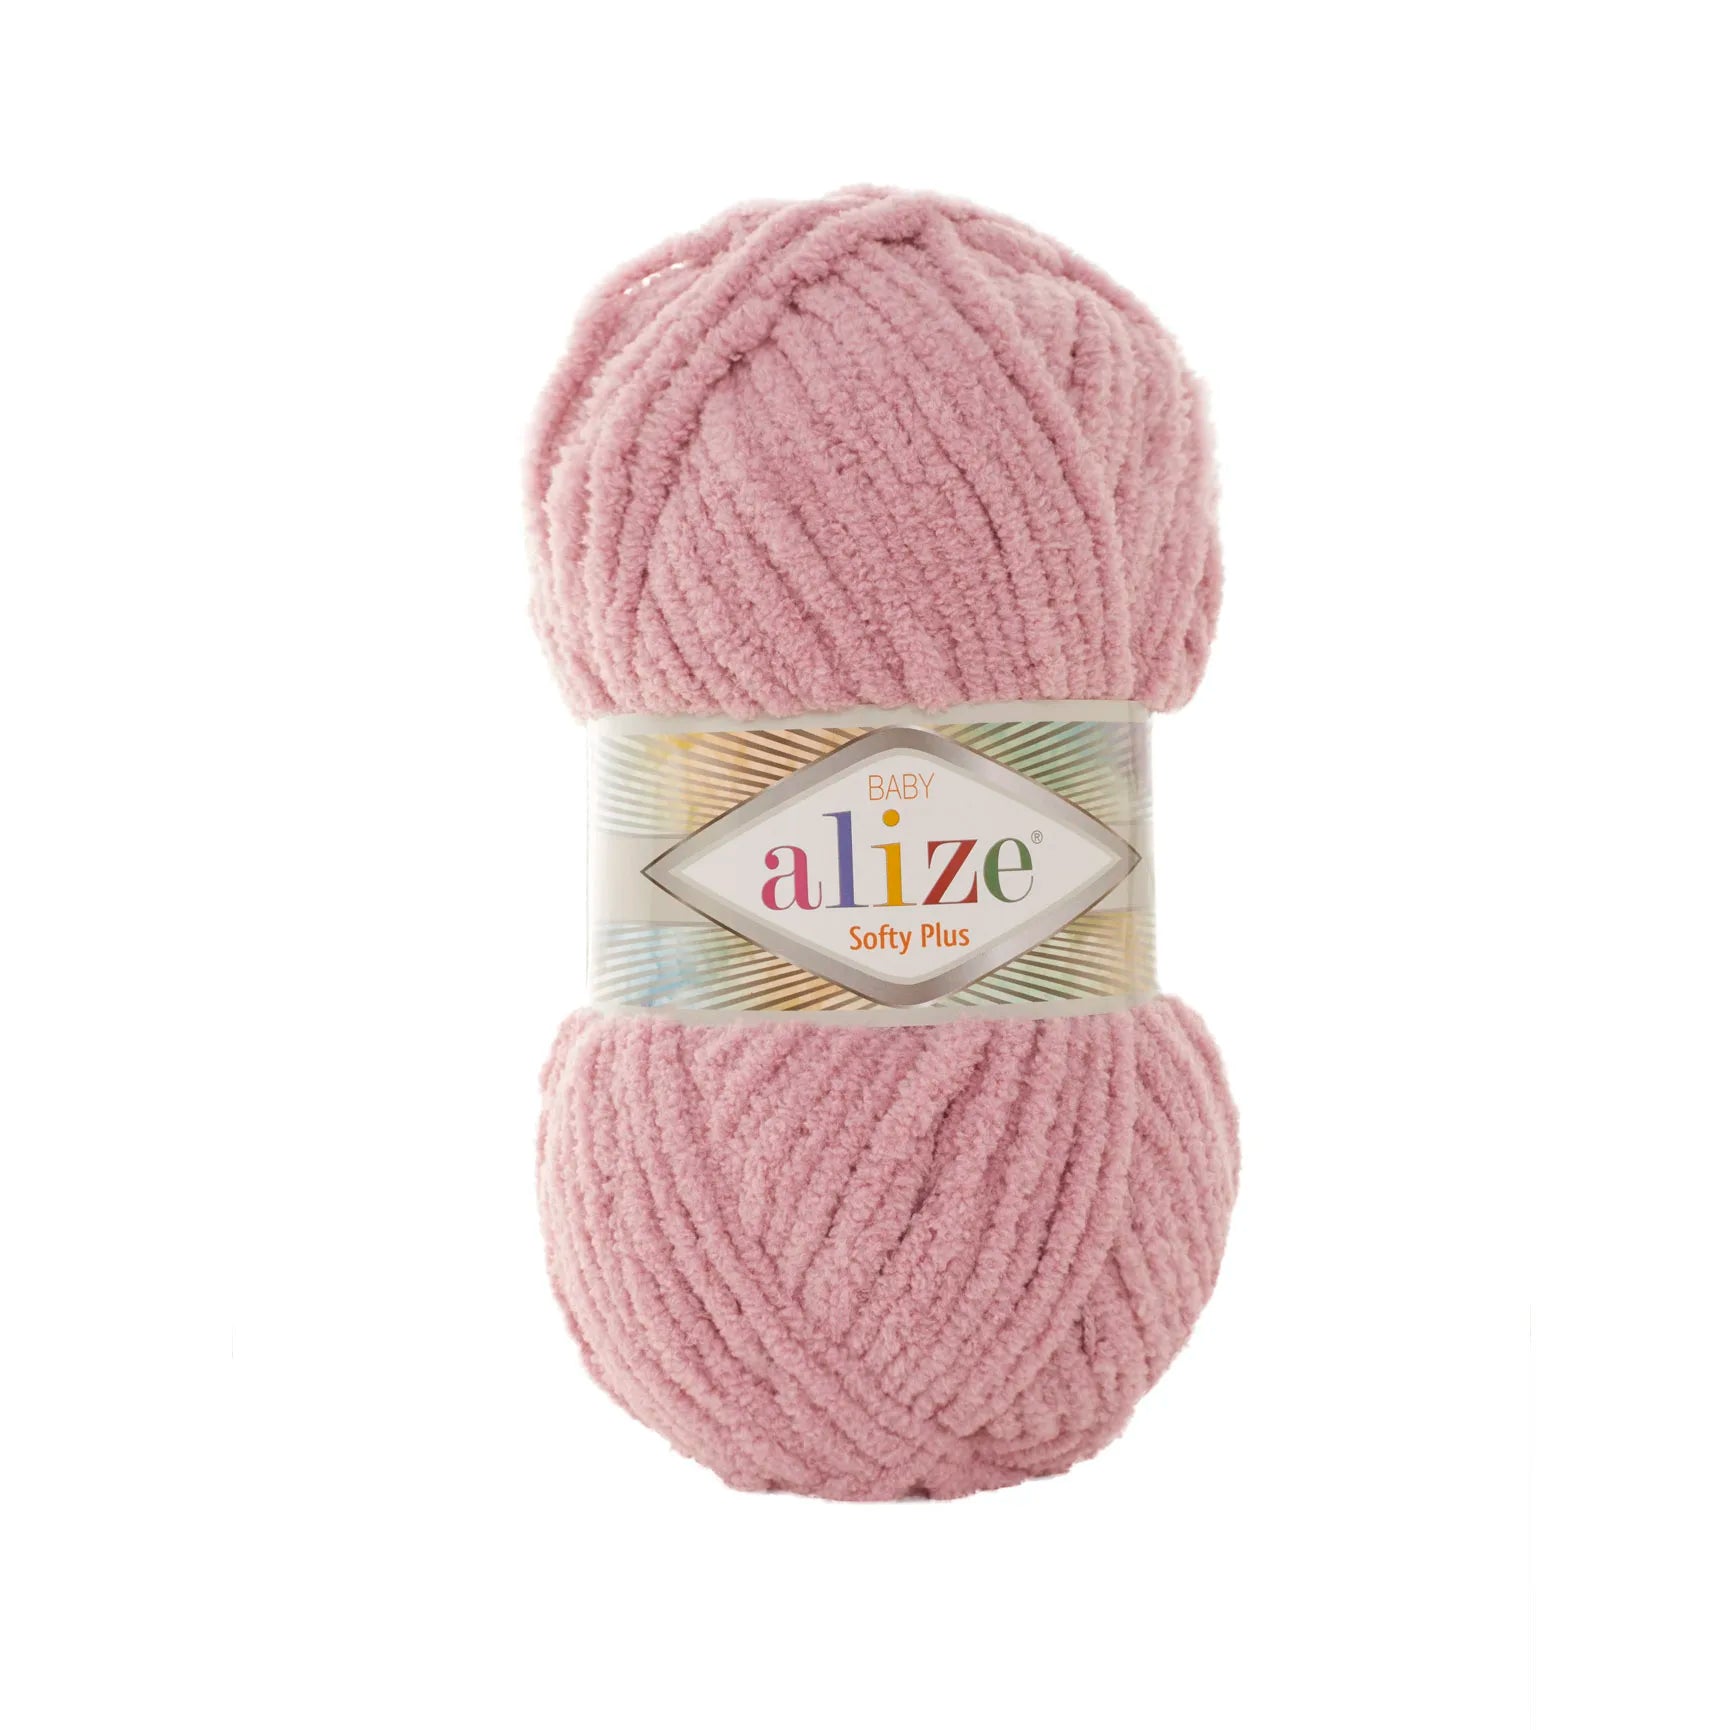 Alize Softy Plus Yarn Hobby Shopy Turkish Store Shop Hand Knitting Yarn 295